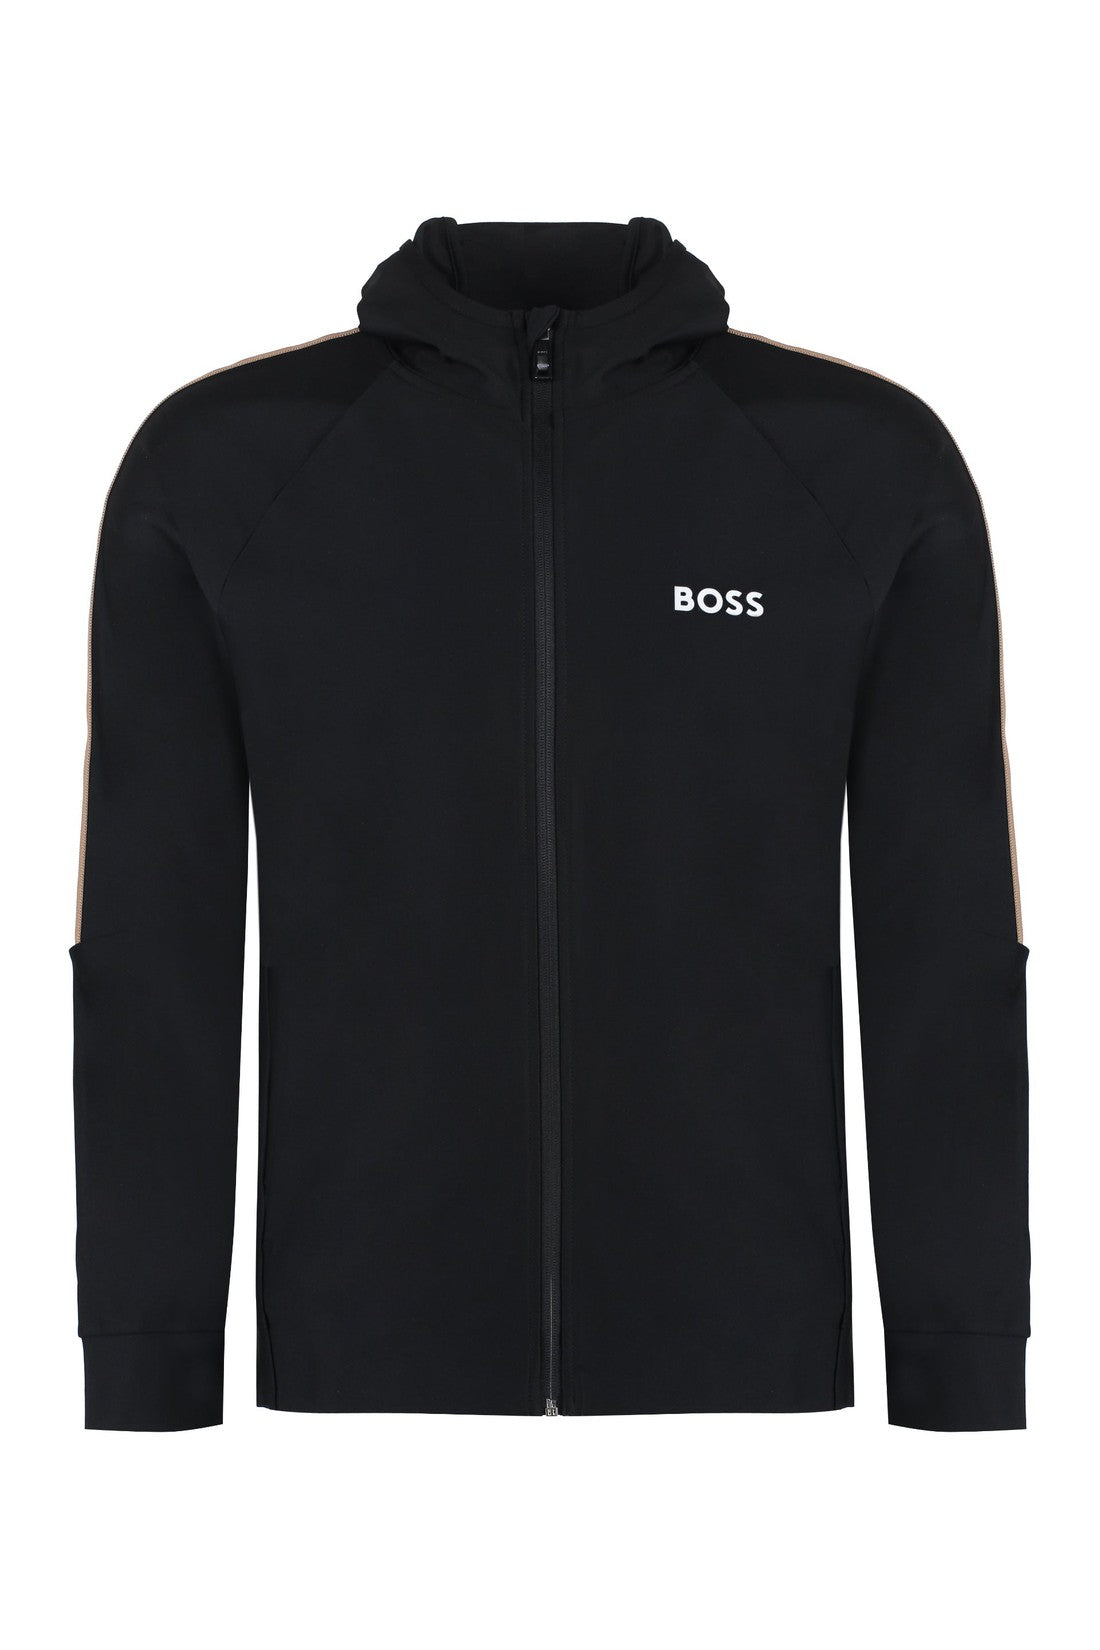 BOSS-OUTLET-SALE-BOSS x Matteo Berrettini - Full zip hoodie-ARCHIVIST